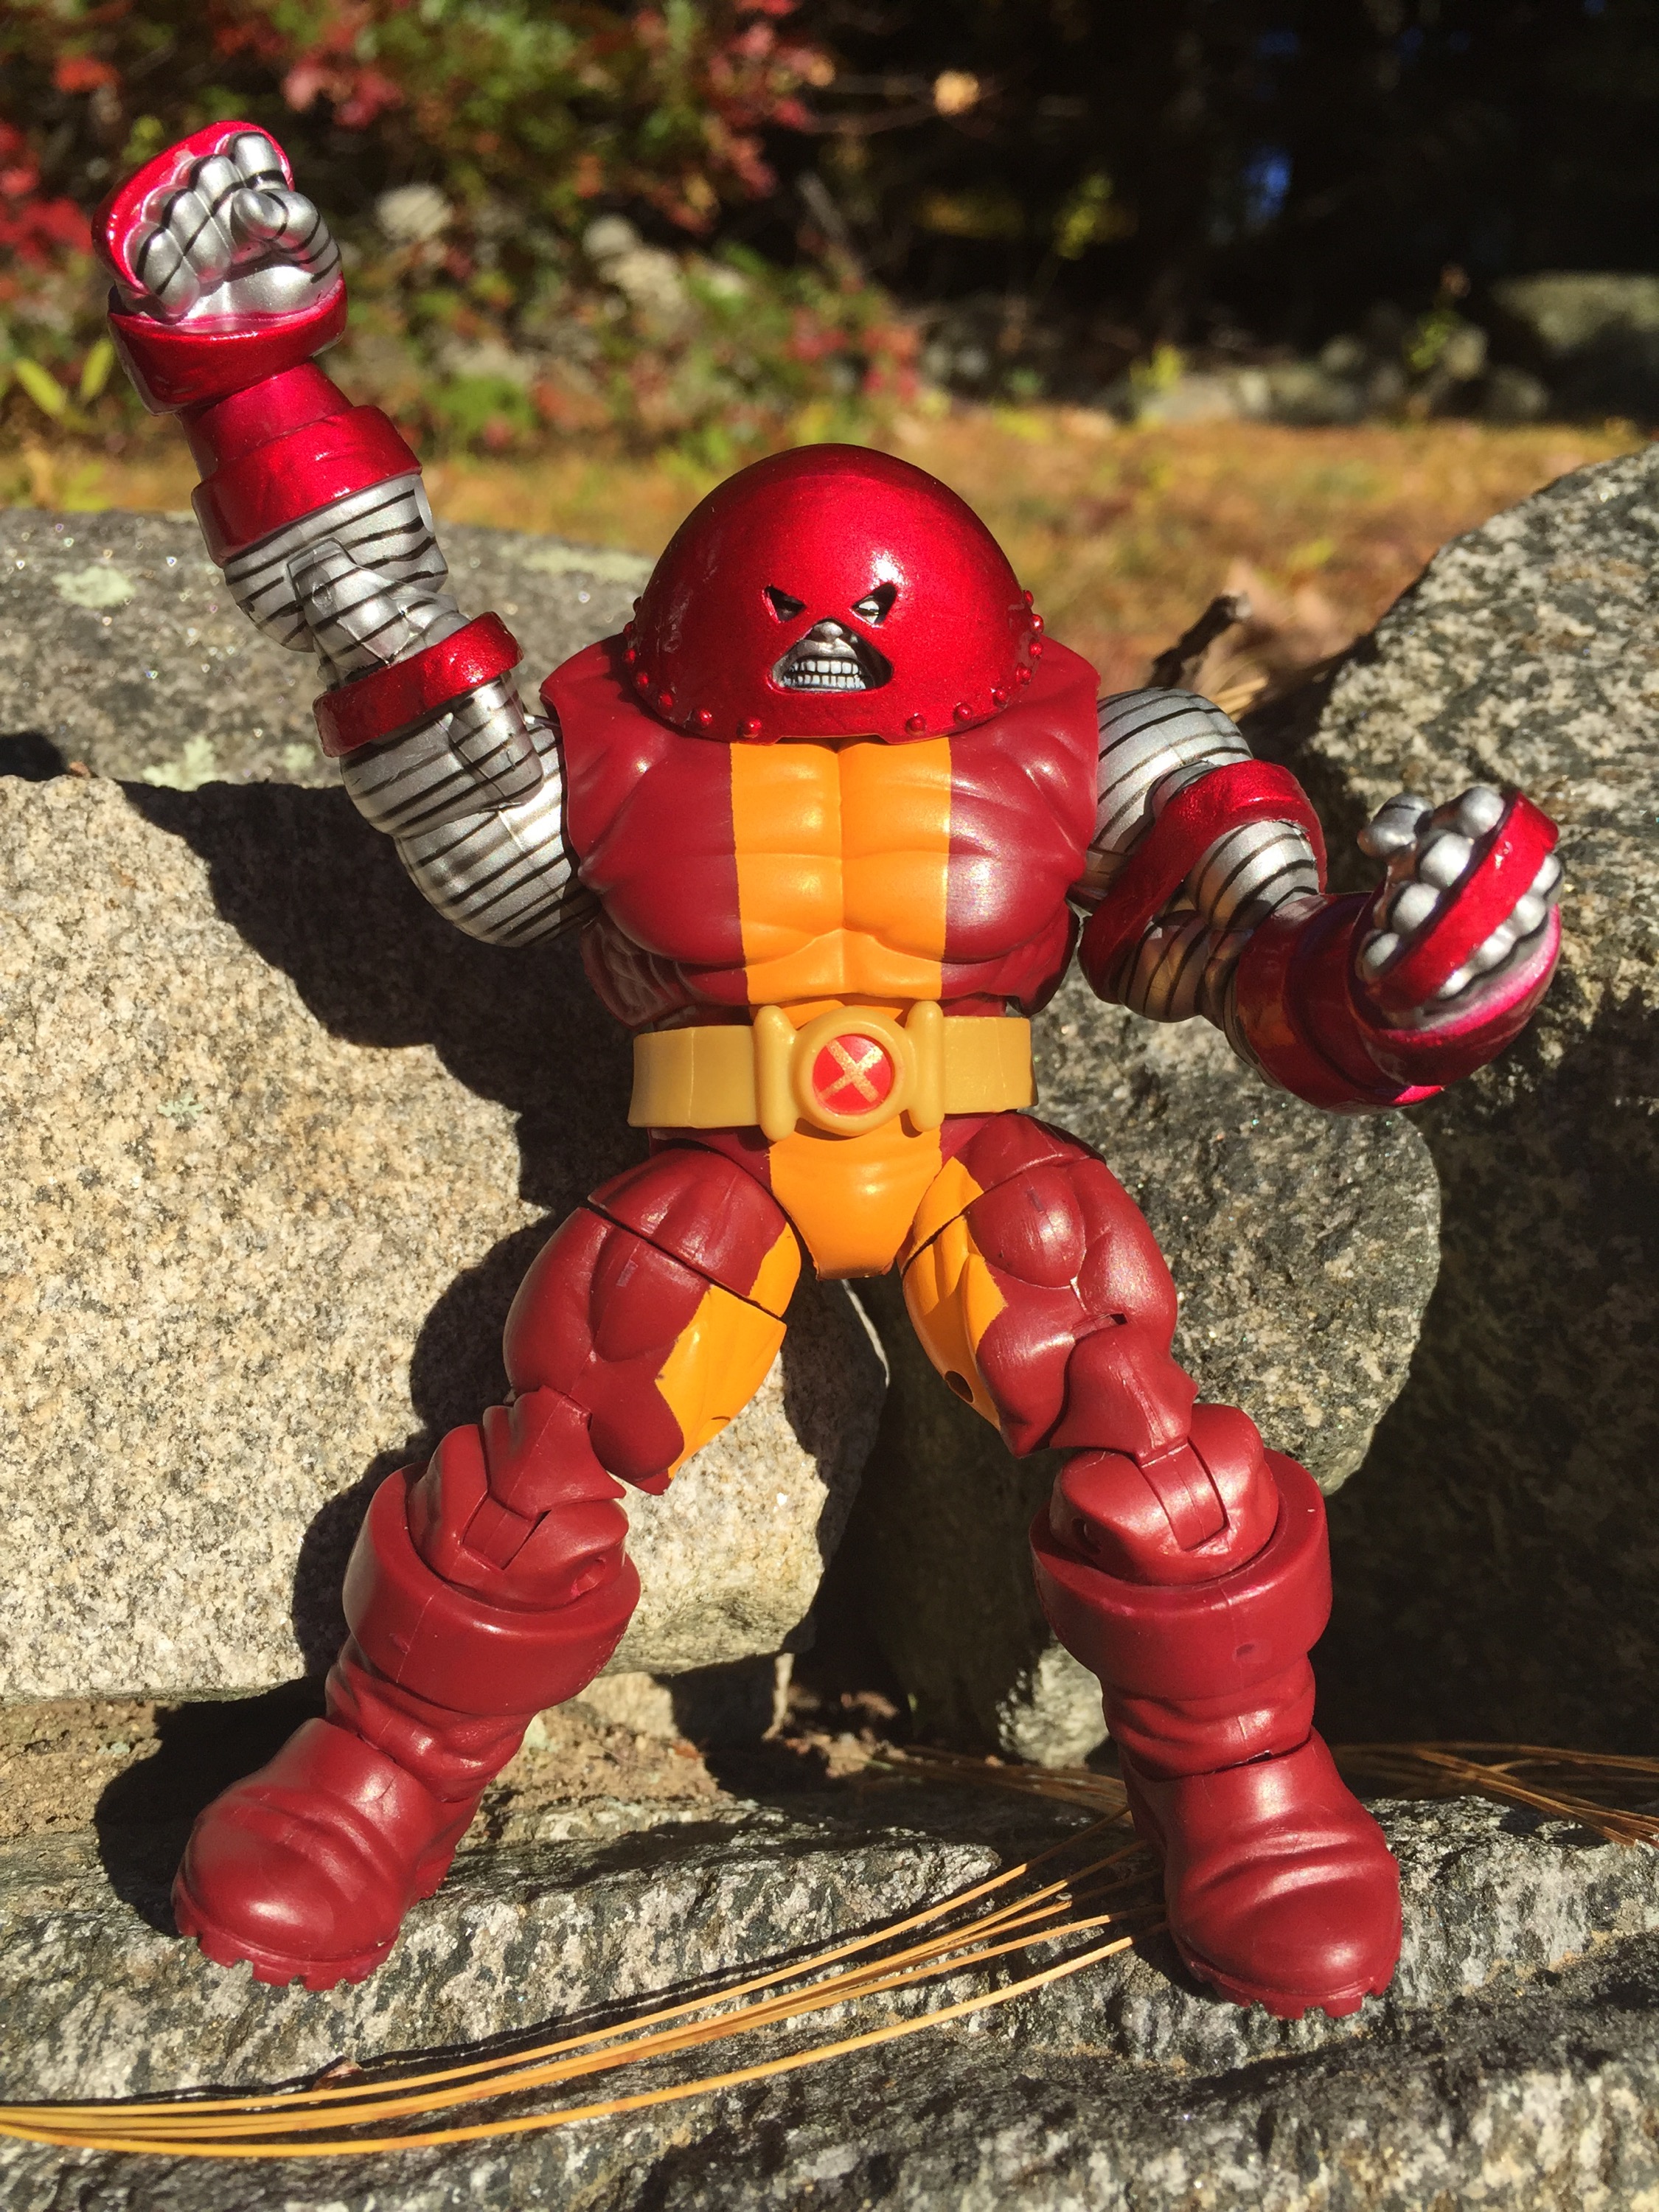 colossus juggernaut action figure